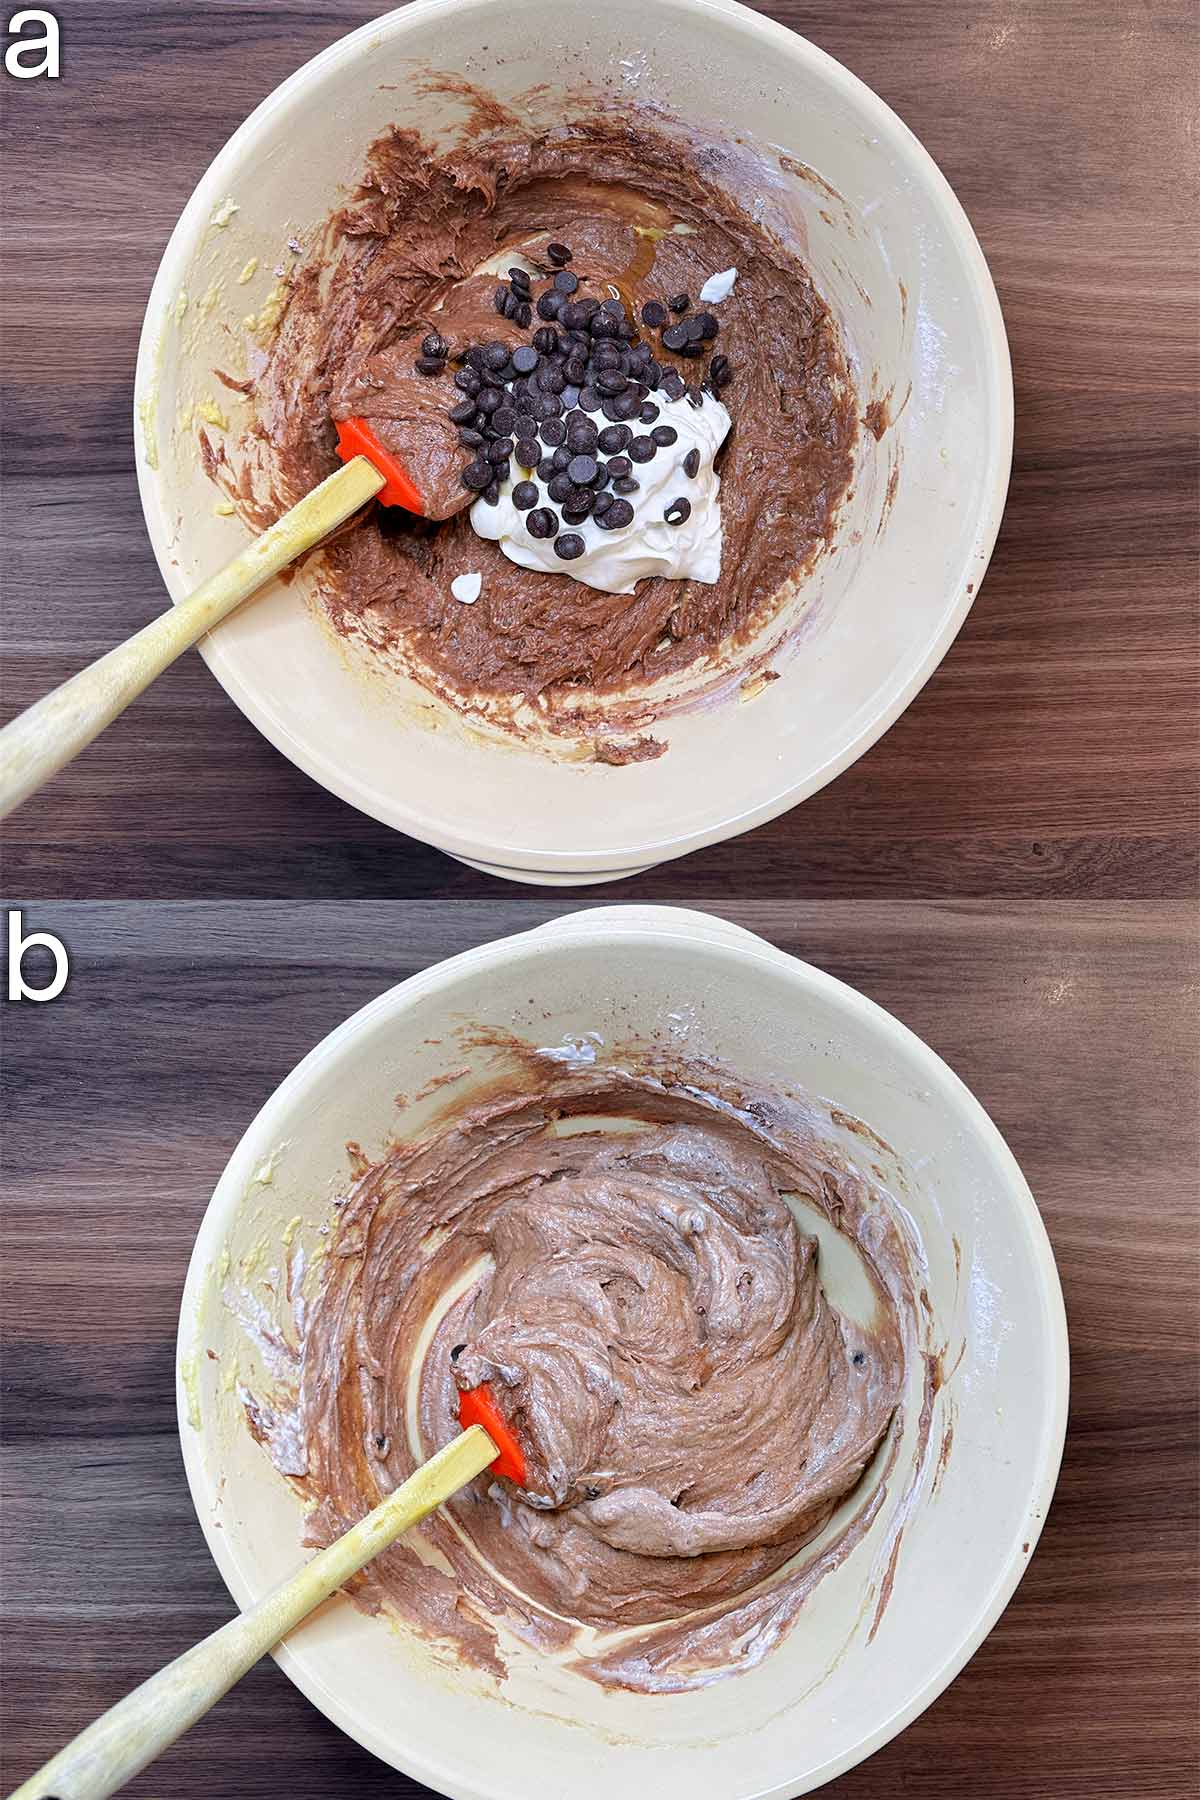 Yogurt, vanilla and chocolate chips added to the bowl.